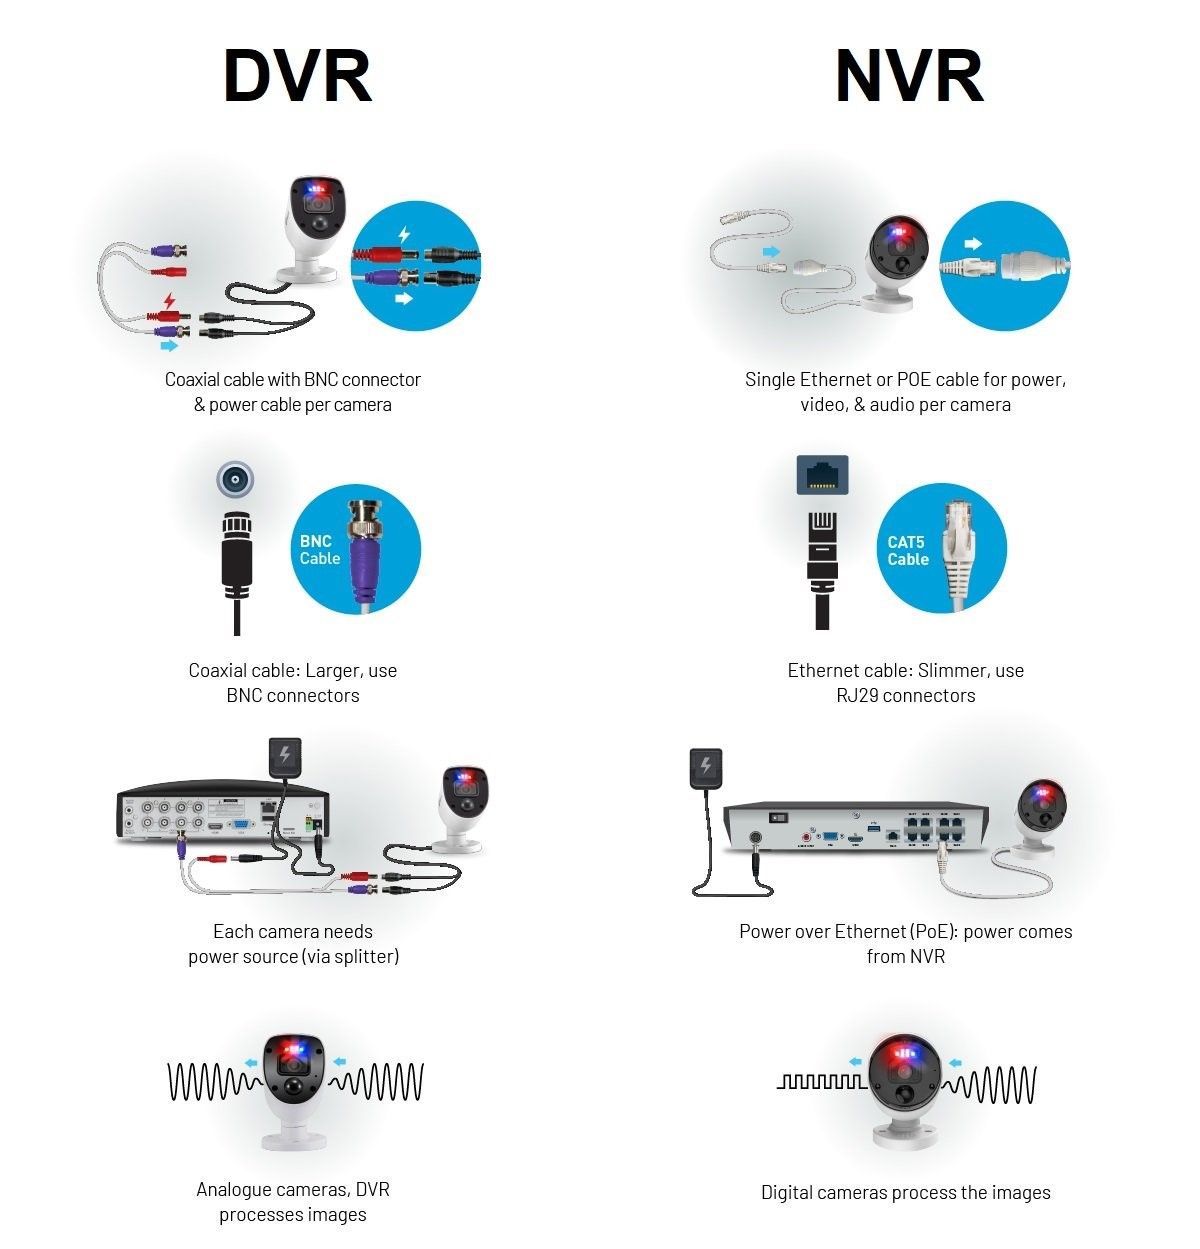 NVR بخریم یا DVR؟ کدام بهتر است؟